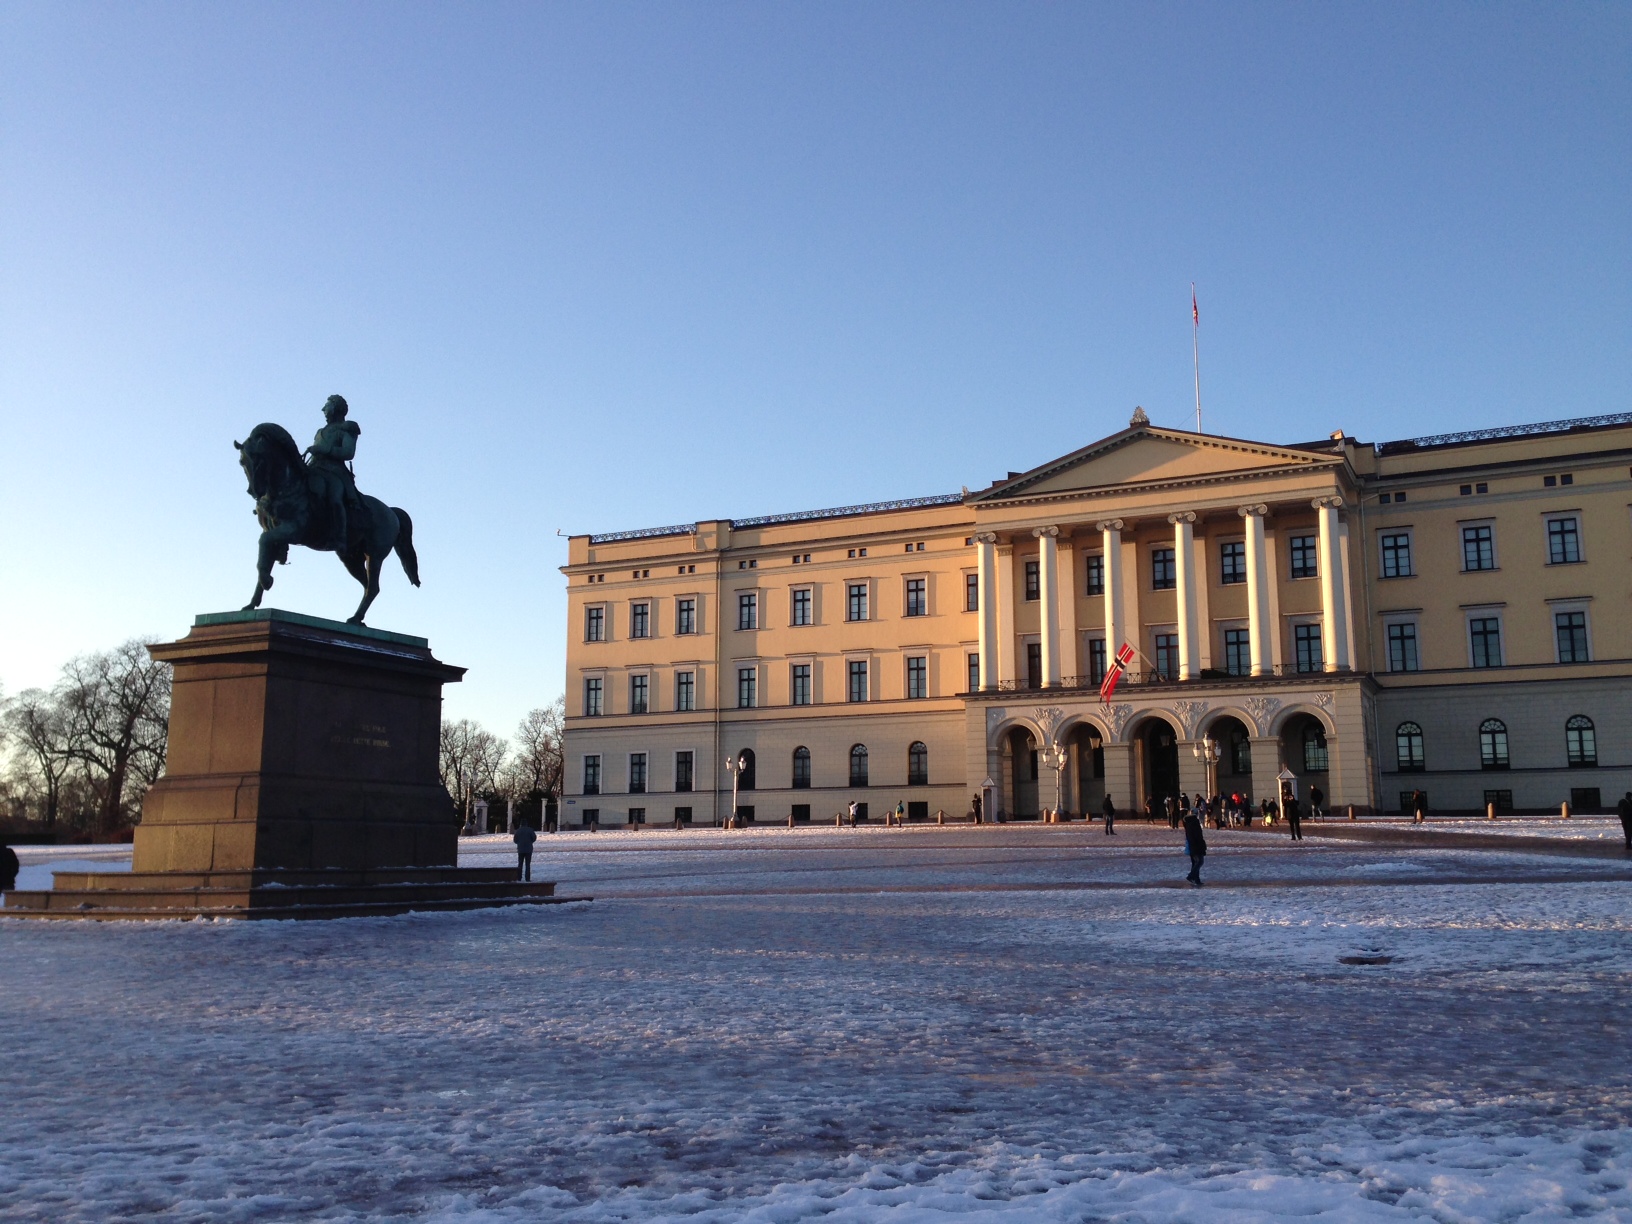 The Royal Castle, Oslo